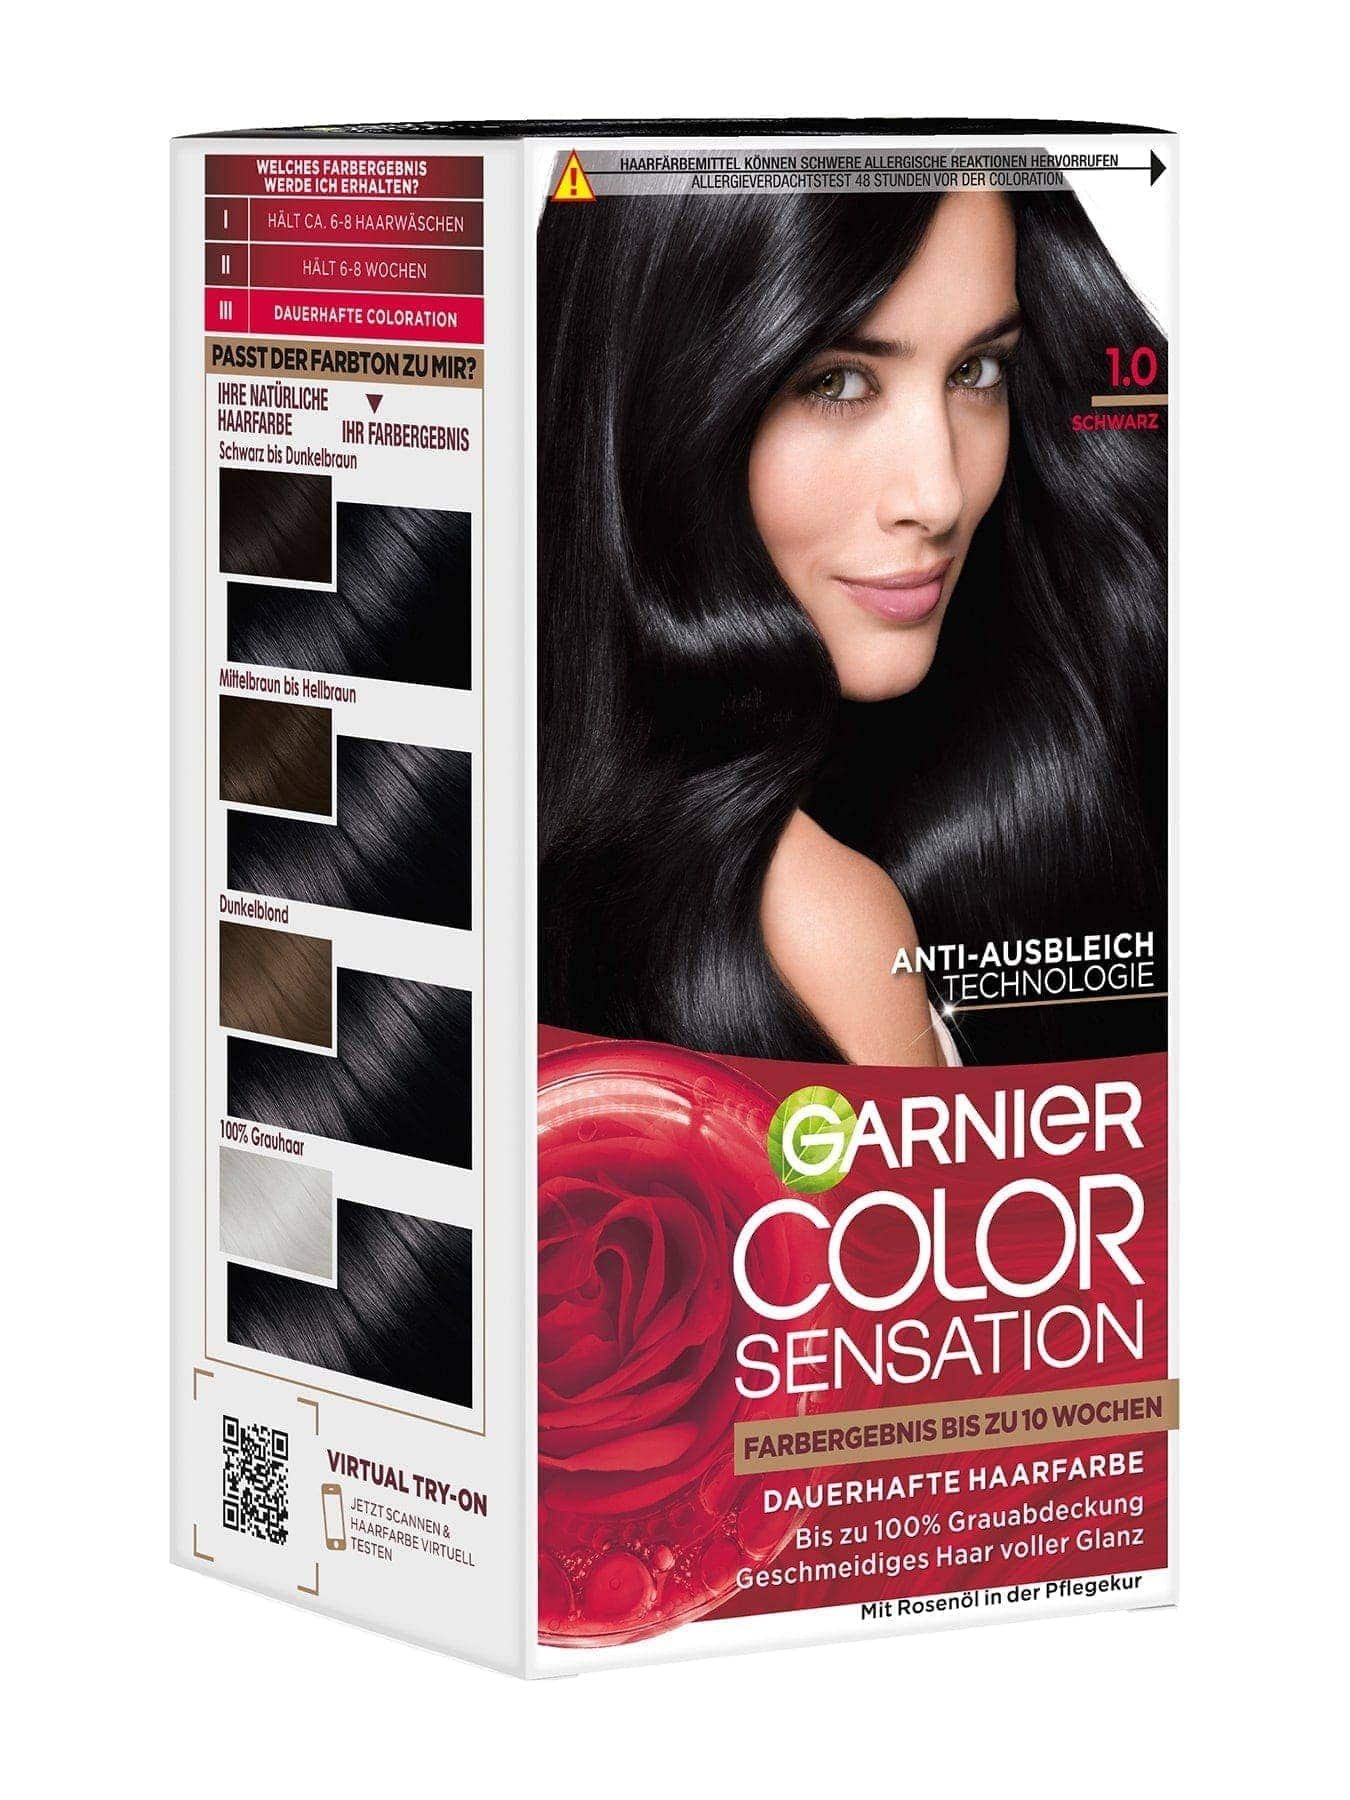 Color Sensation dauerhafte Haarfarbe 1.0 Schwarz Produktbild